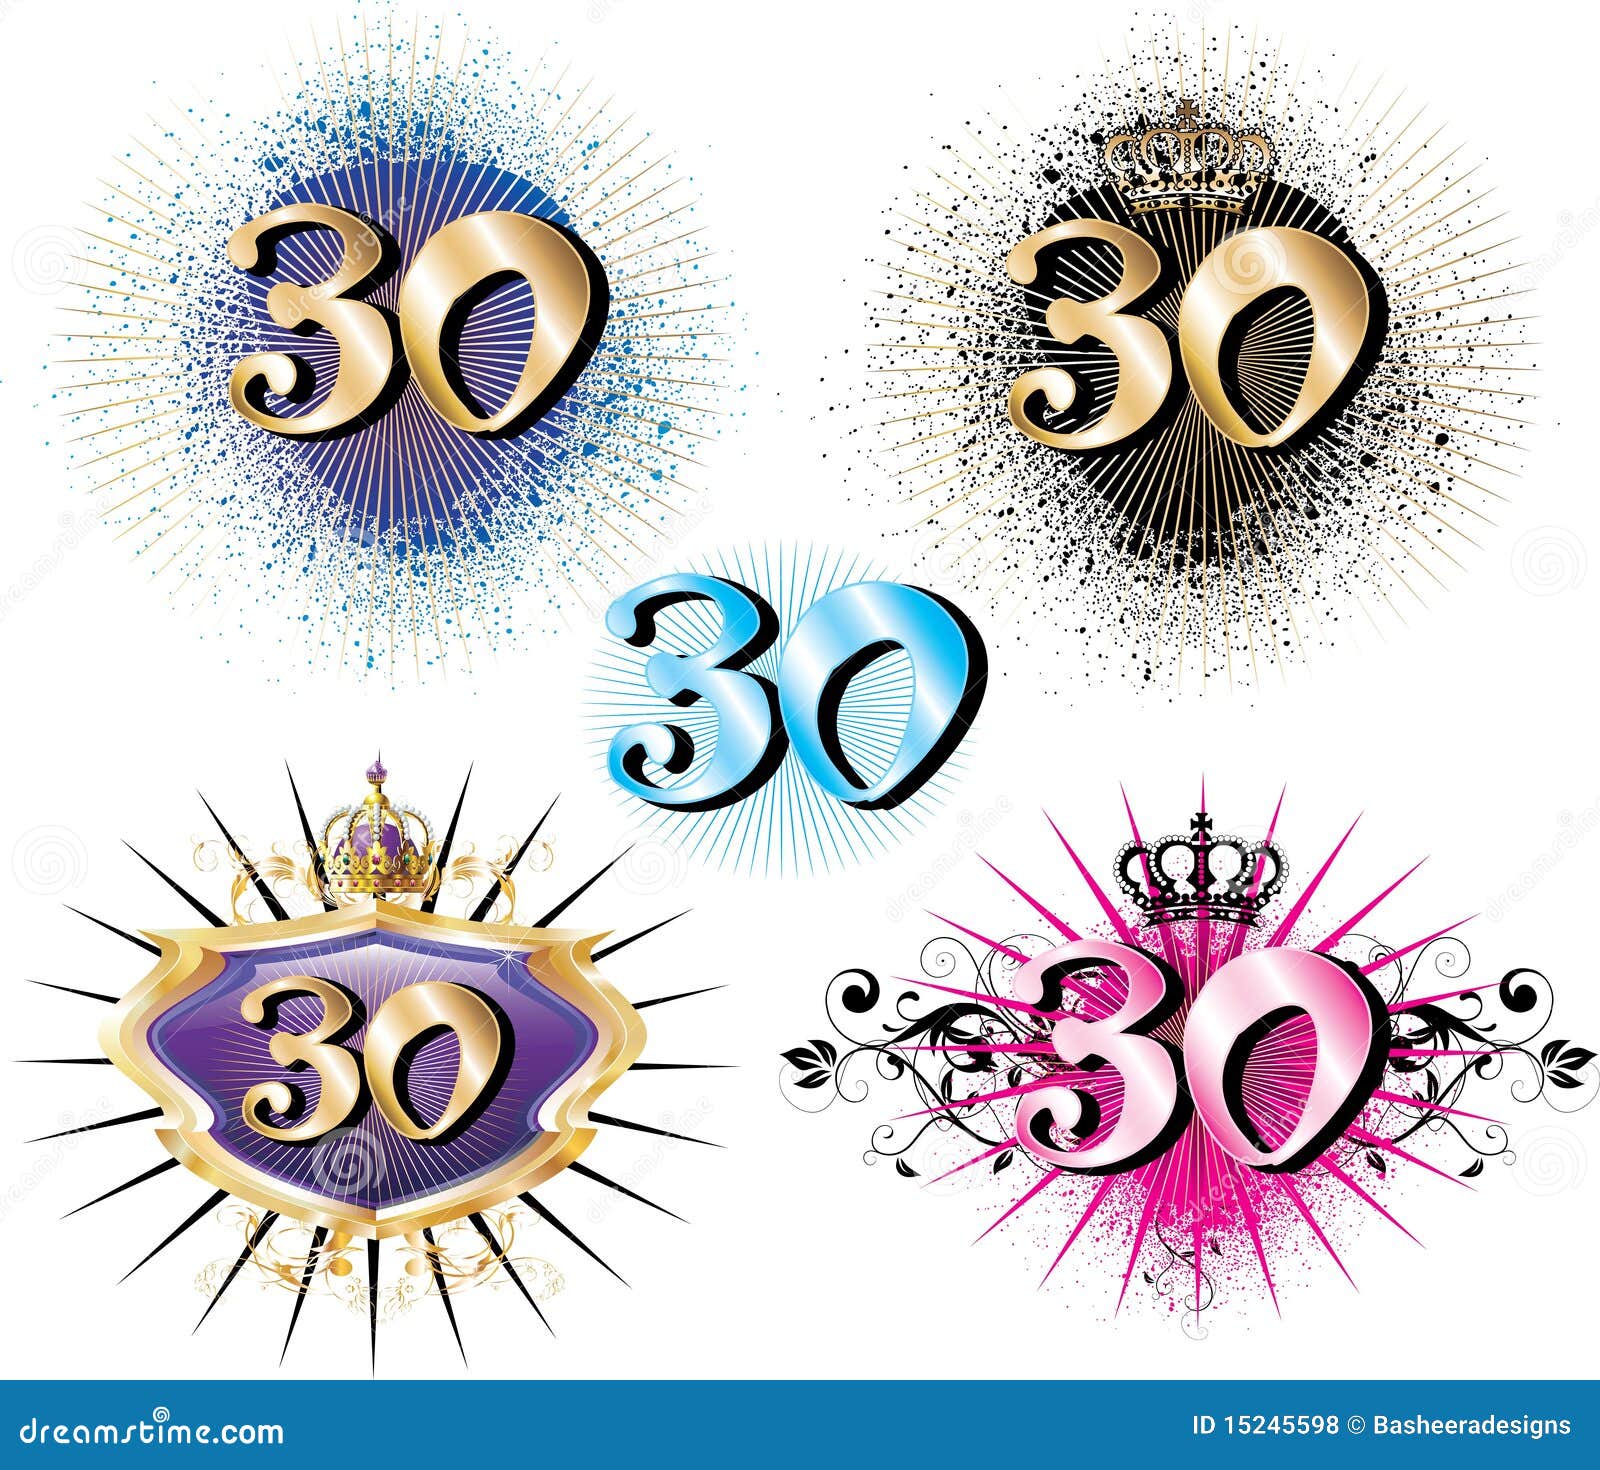 30th Birthday Or Anniversary Royalty Free Stock Photos - Image: 15245598